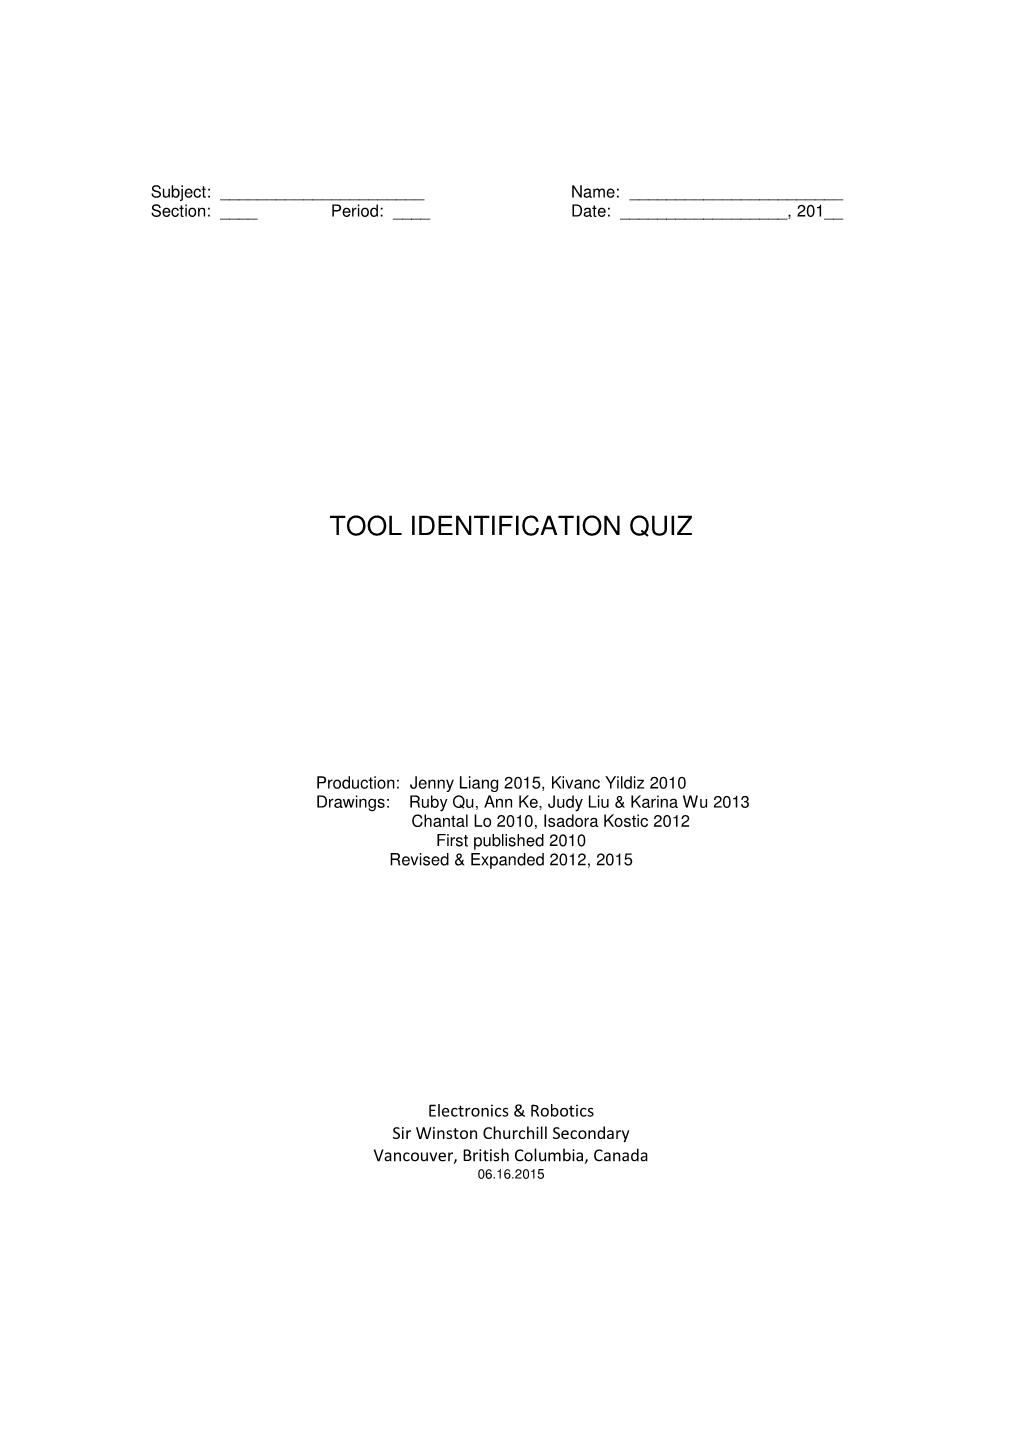 Tool Identification Quiz